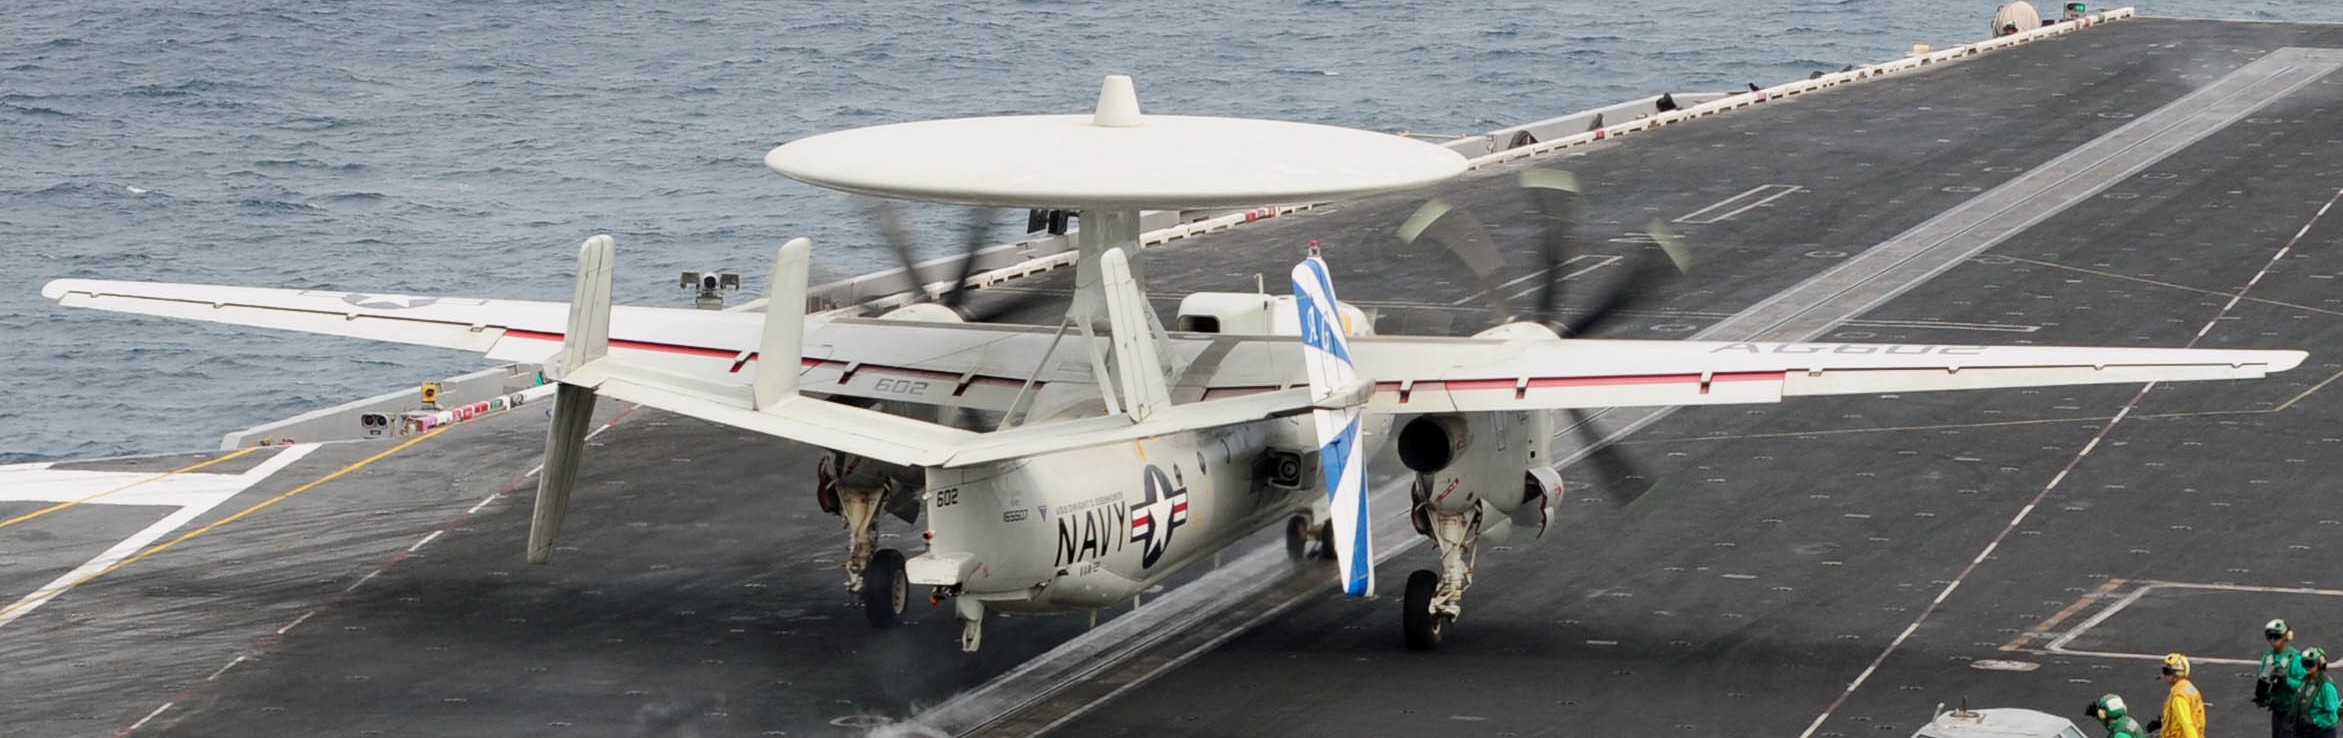 vaw-121 bluetails carrier airborne early warning squadron us navy e-2c hawkeye cvw-7 uss dwight d. eisenhower cvn-69 28